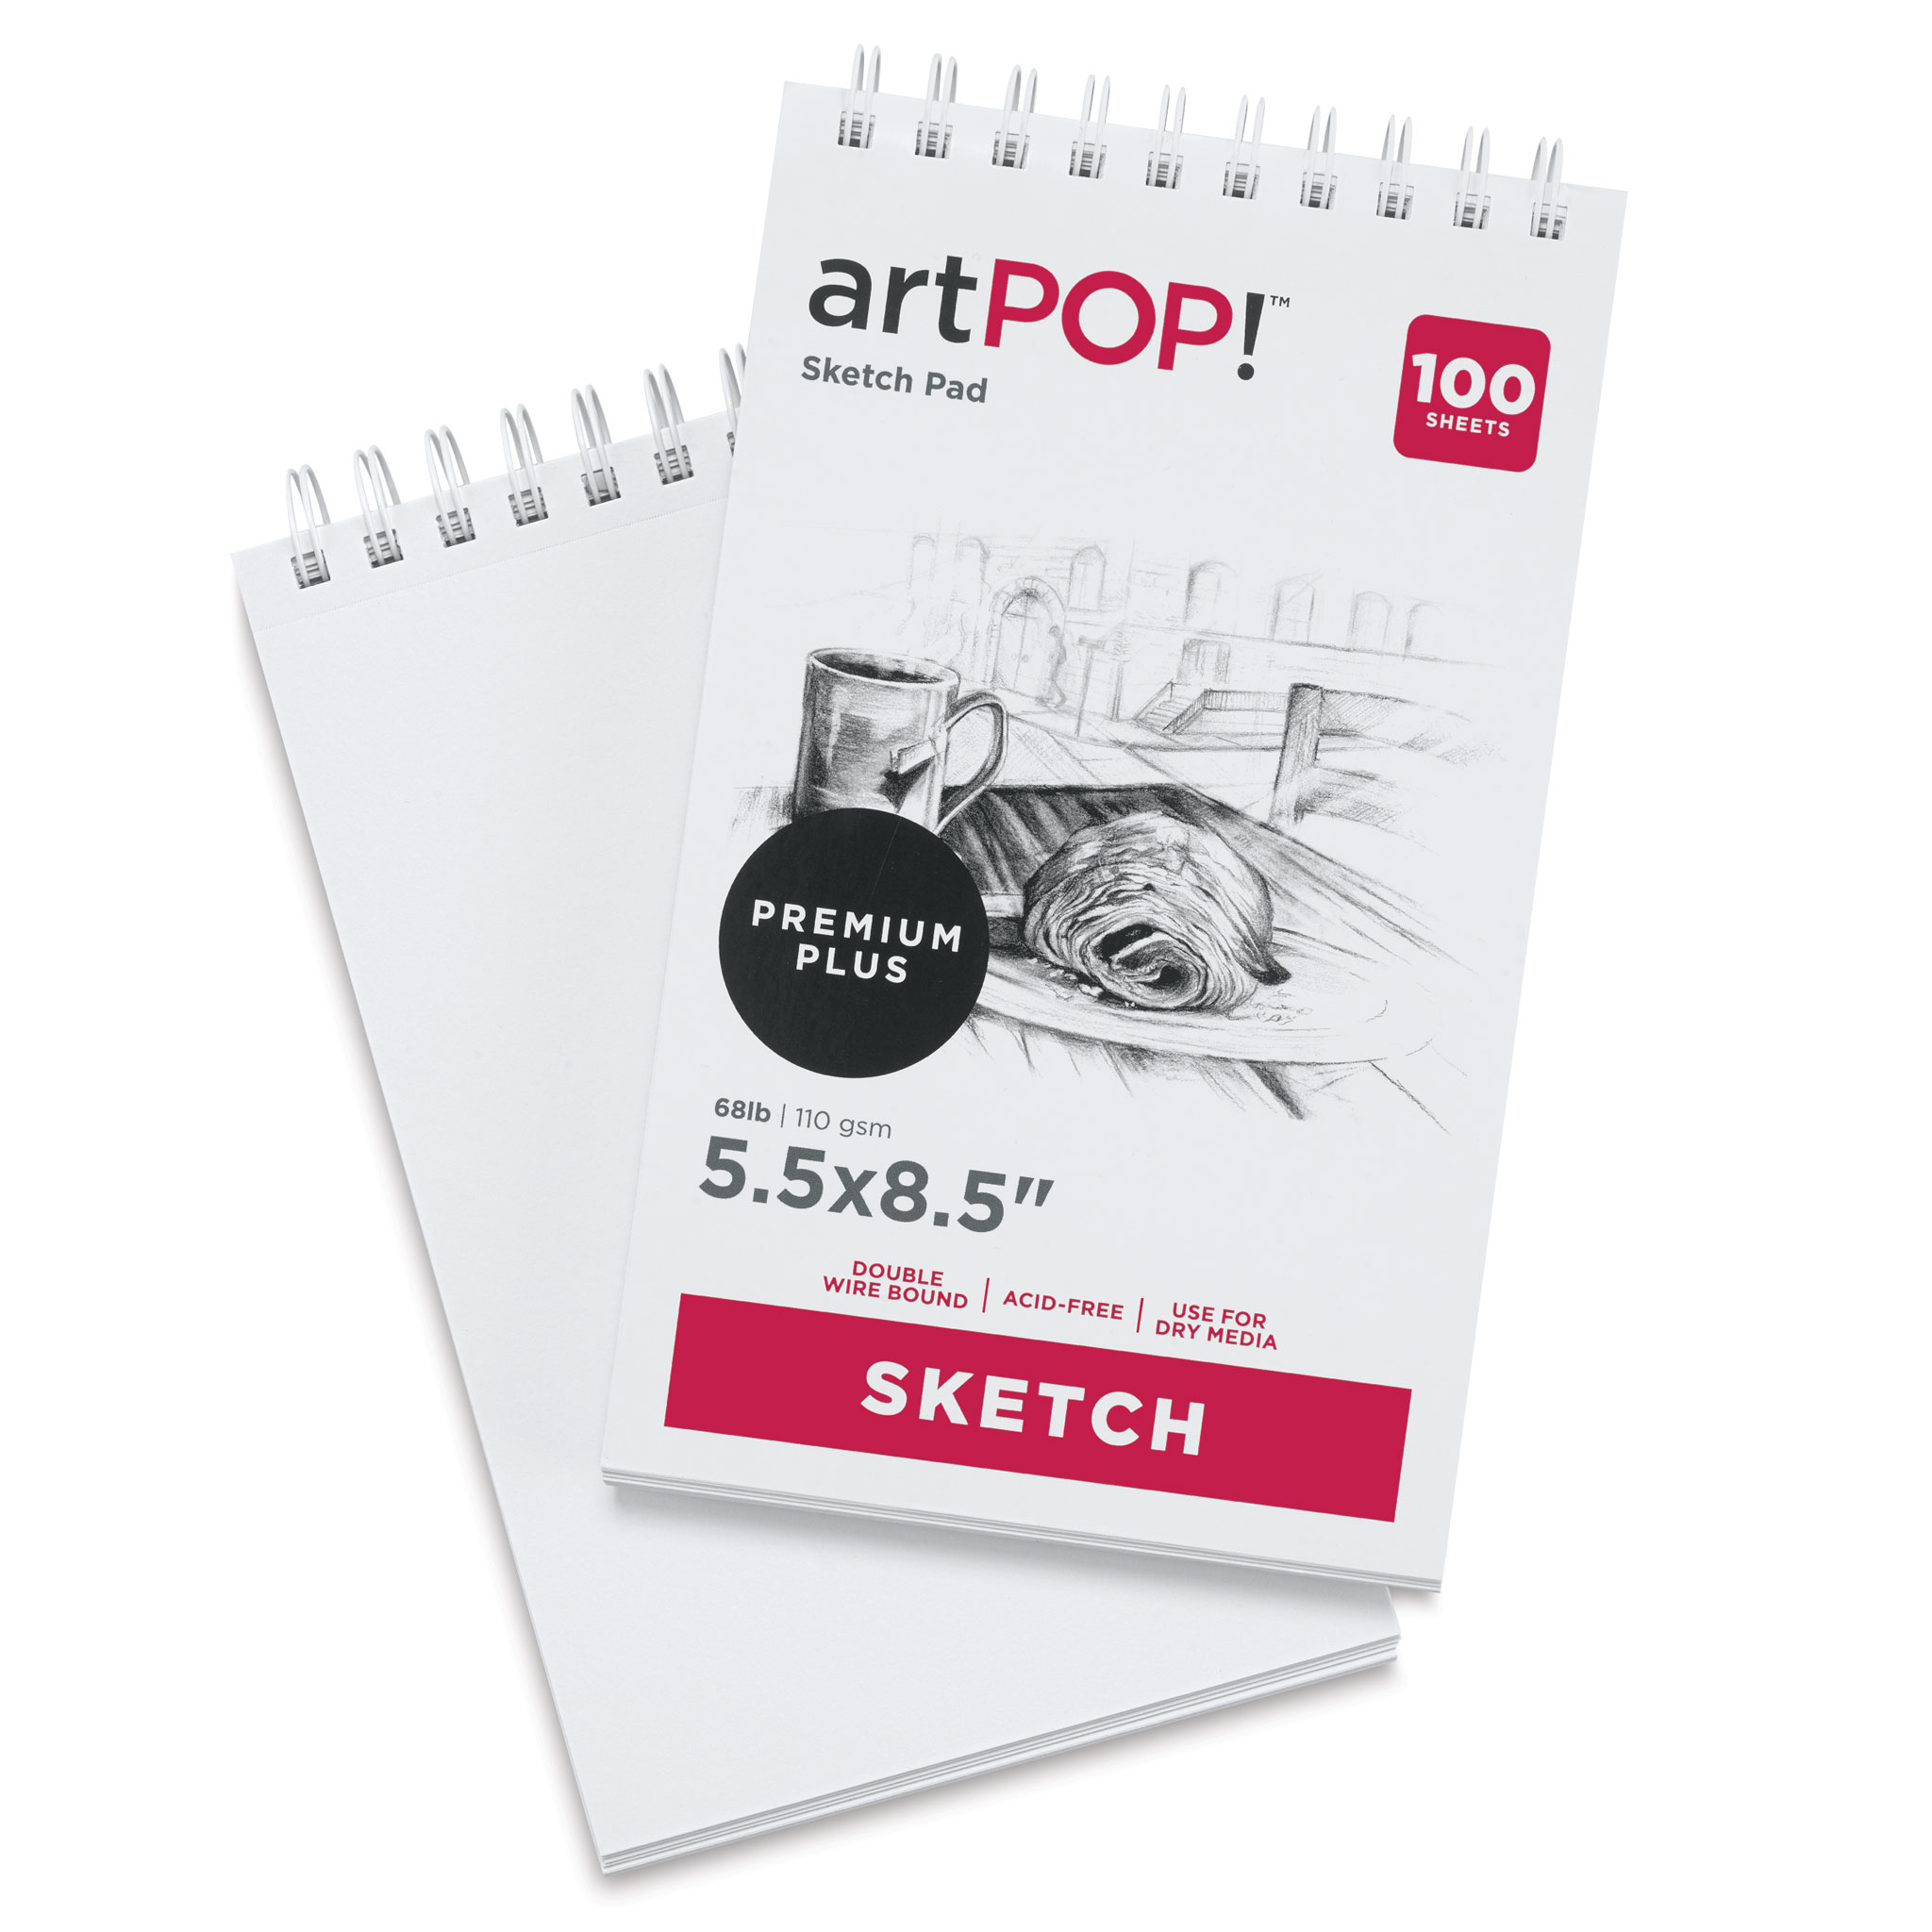 artPOP! Drawing Pencil Set